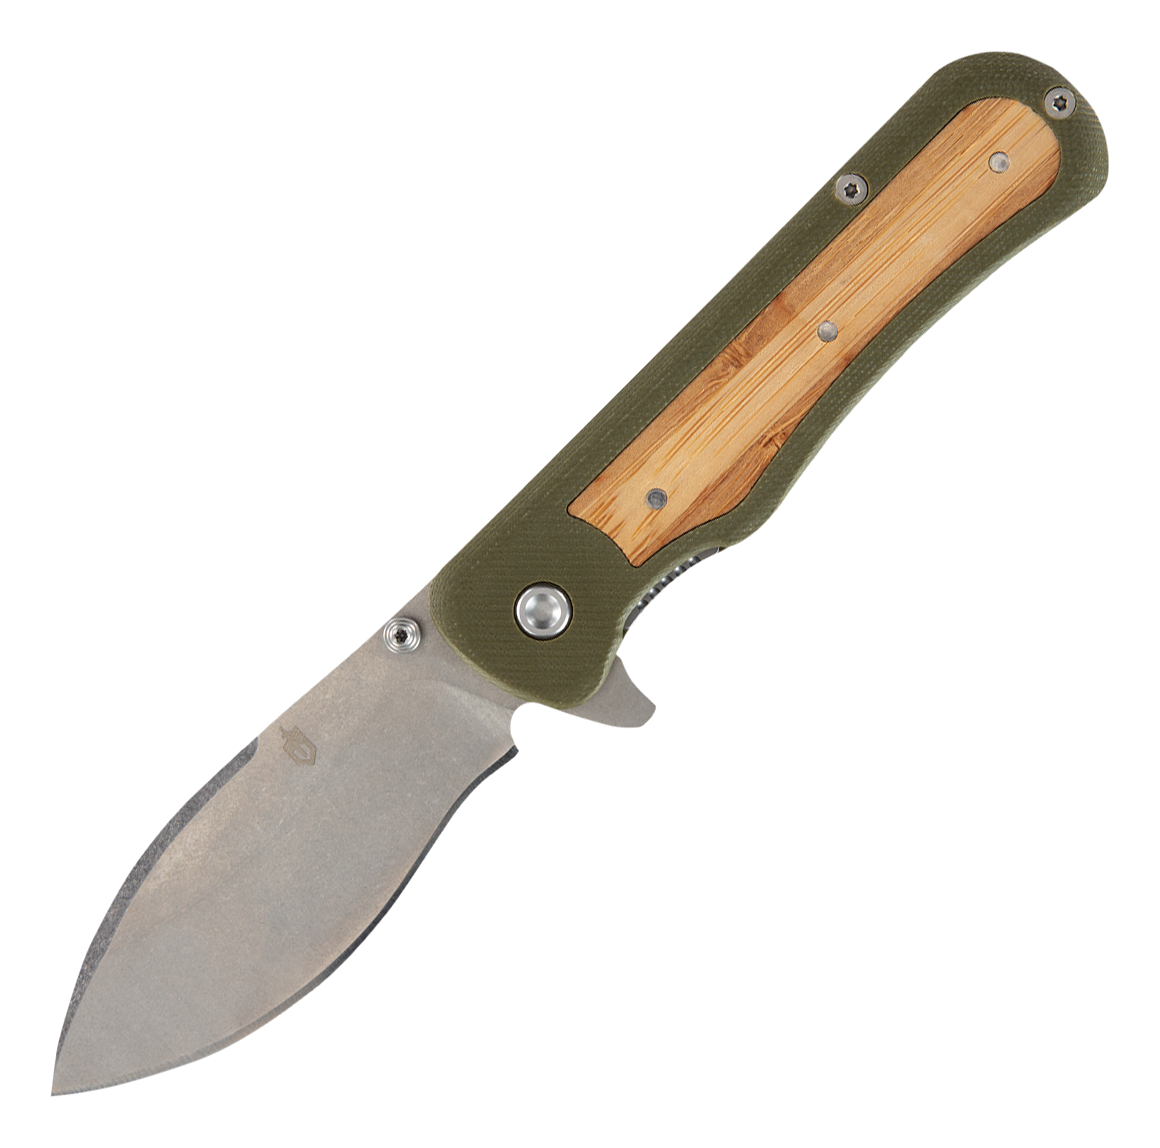 Gerber Confidant Drop-Point Folding Knife